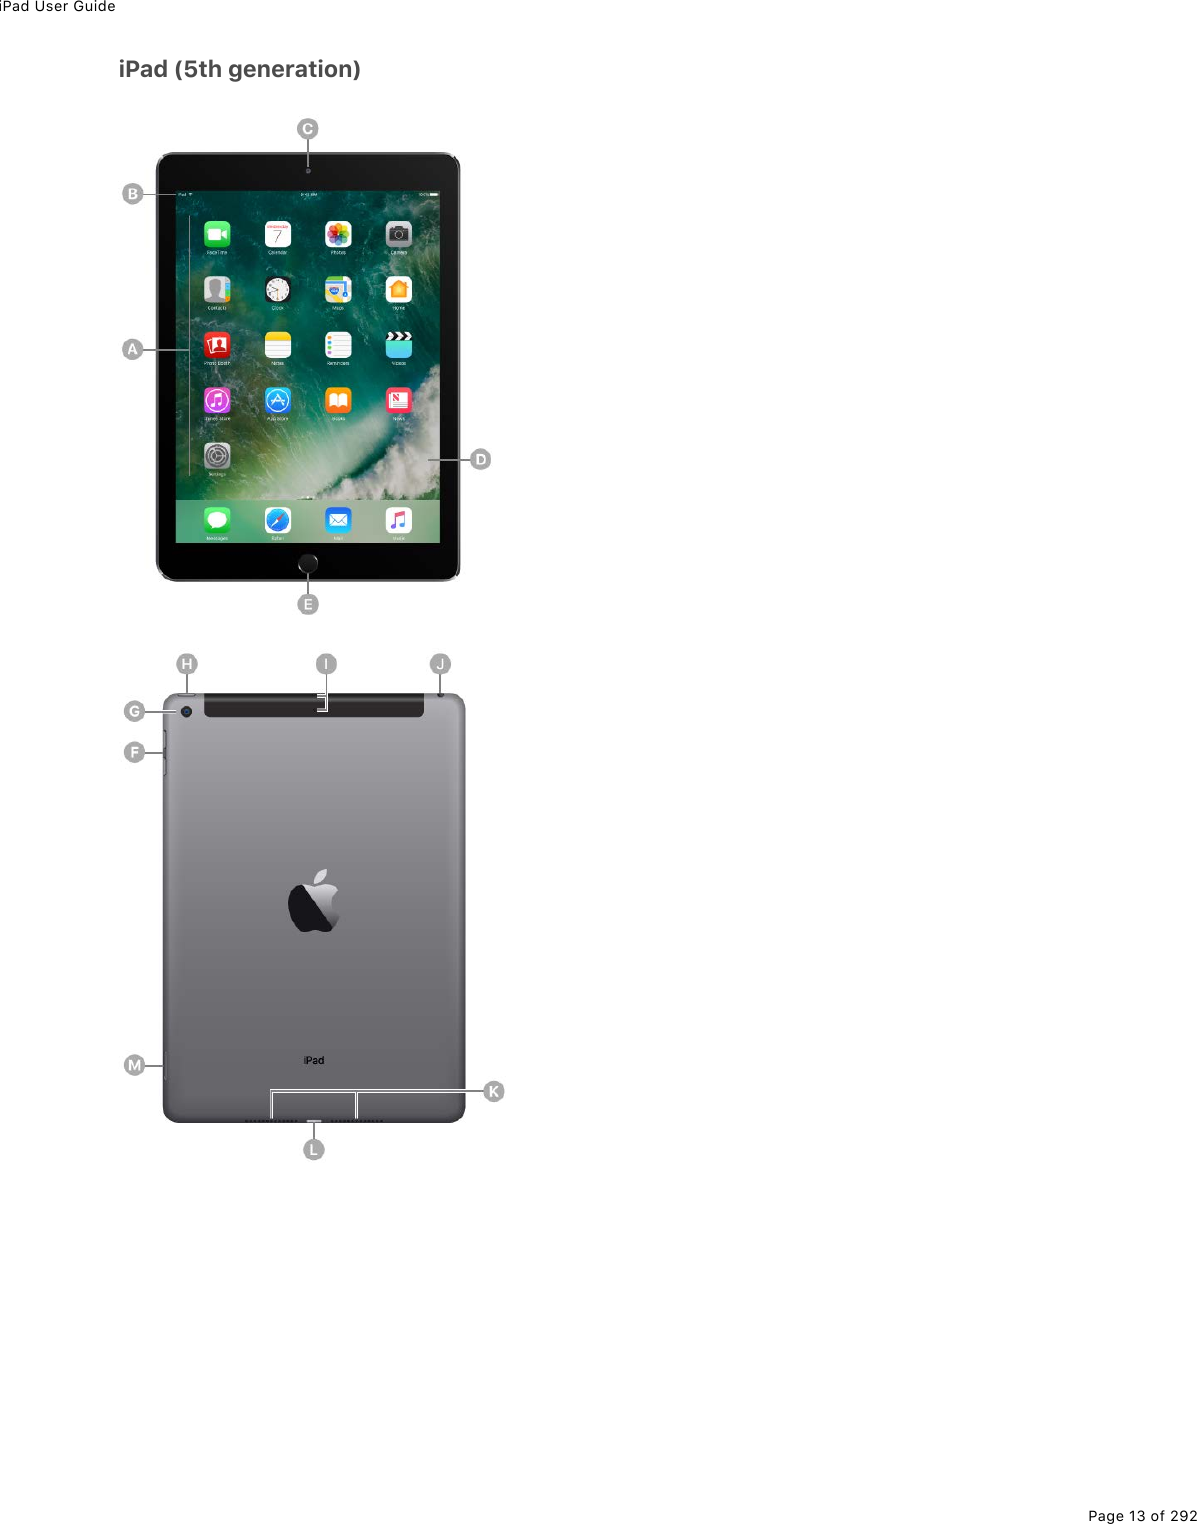 iPad User GuidePage 13 of 292iPad (5th generation)